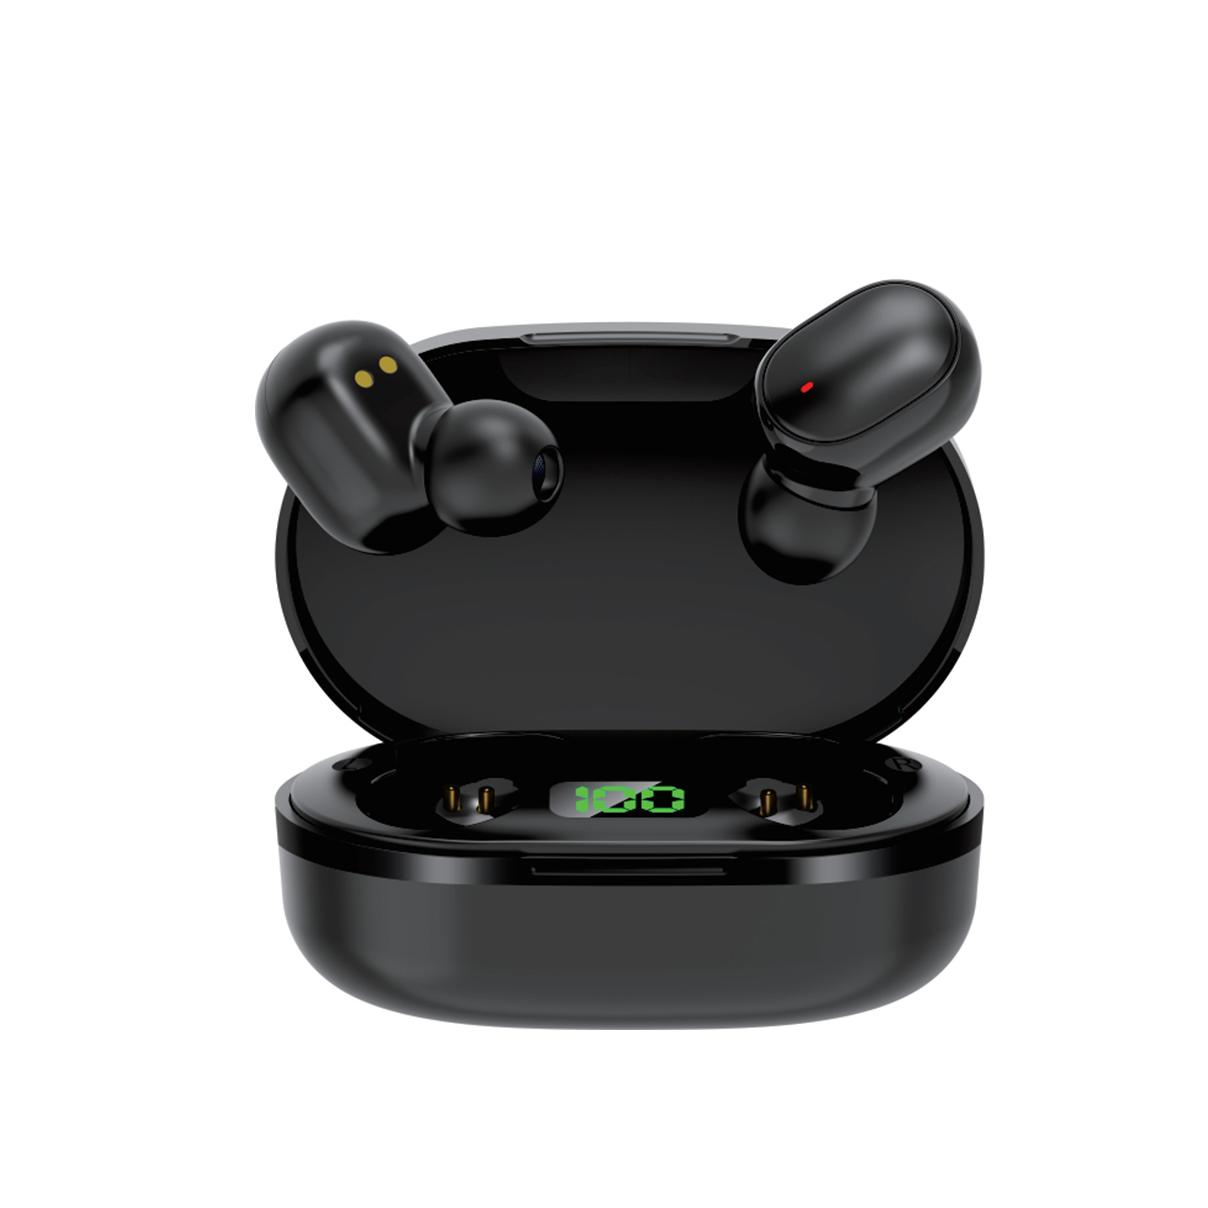 Auriculares de botón PIONEER SE-E9TW-H, Bluetooth, color Gris